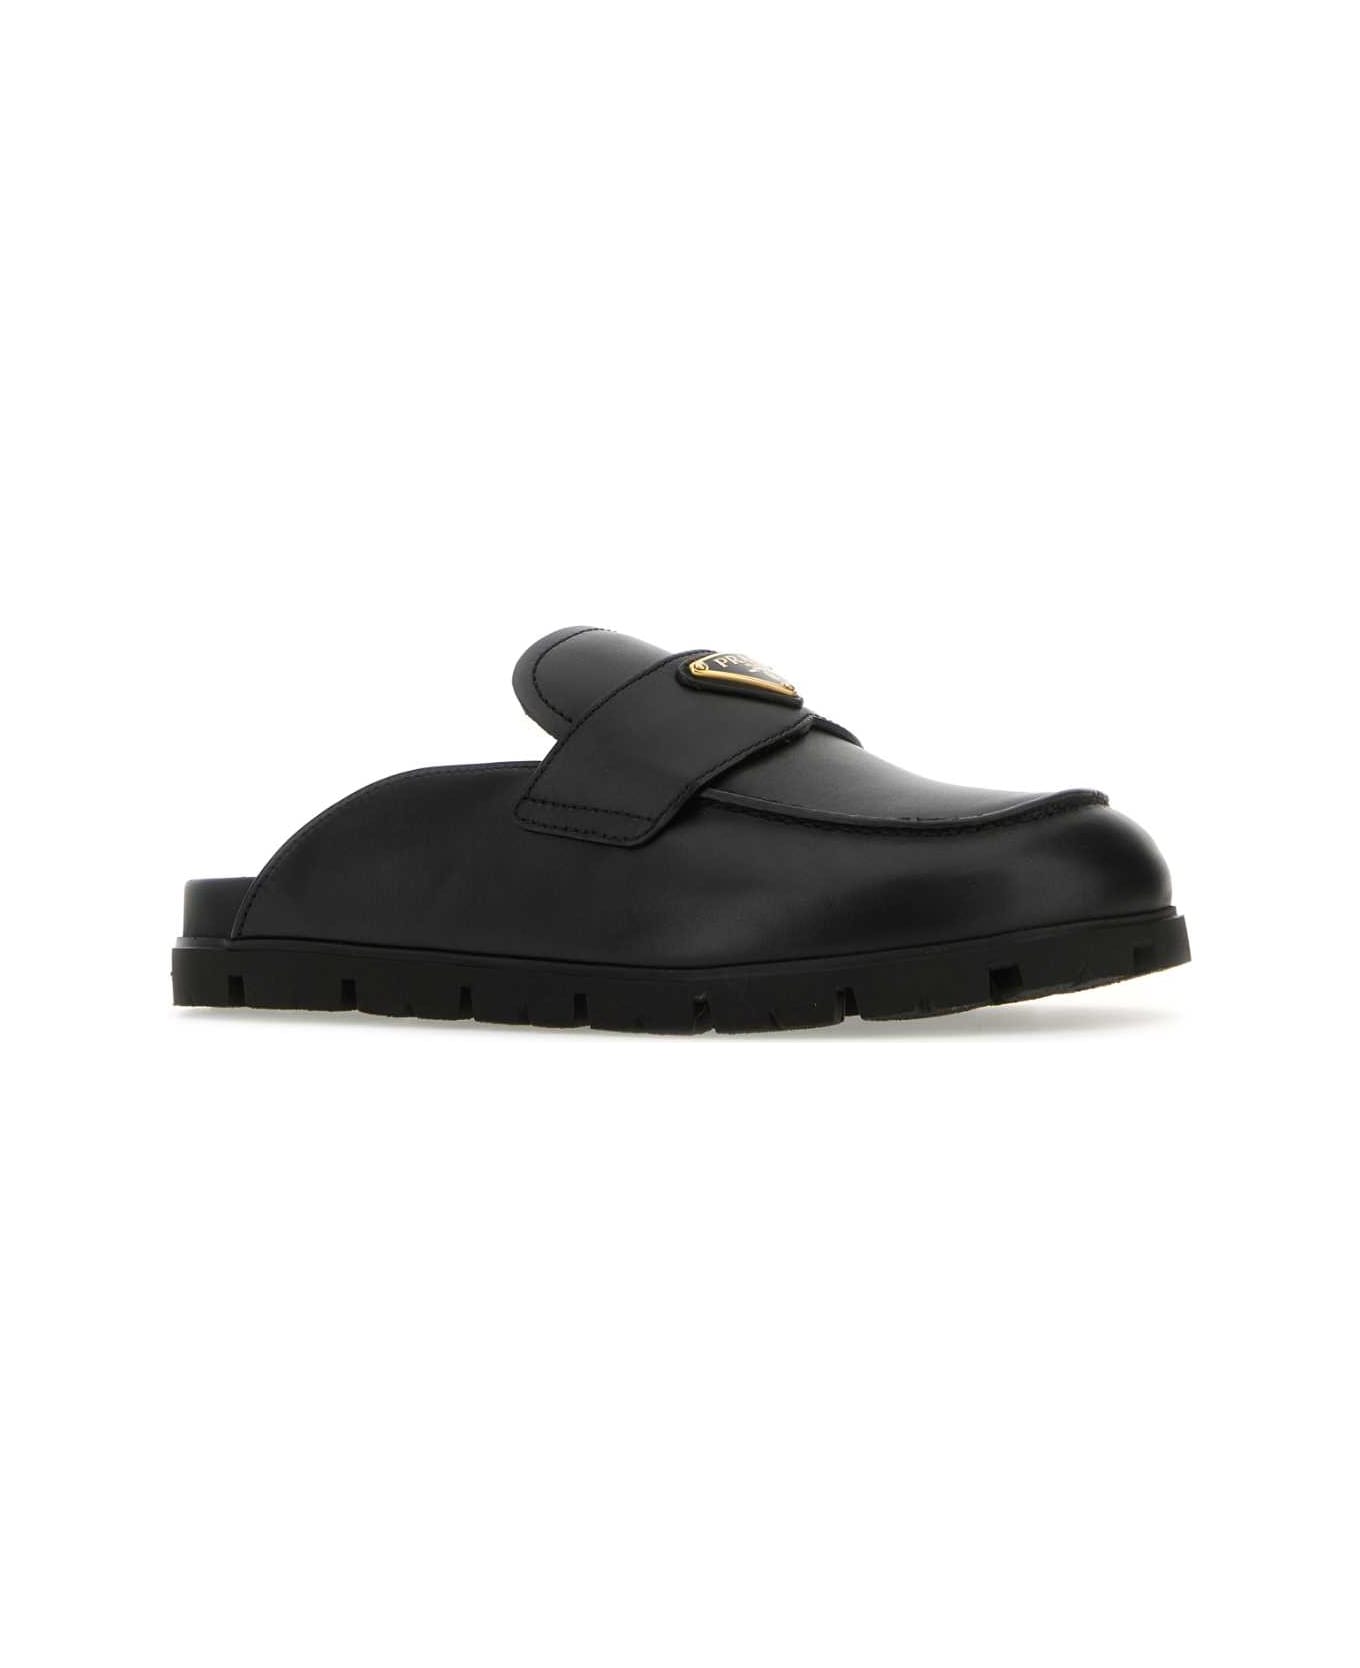 Prada Black Leather Slippers - NERO